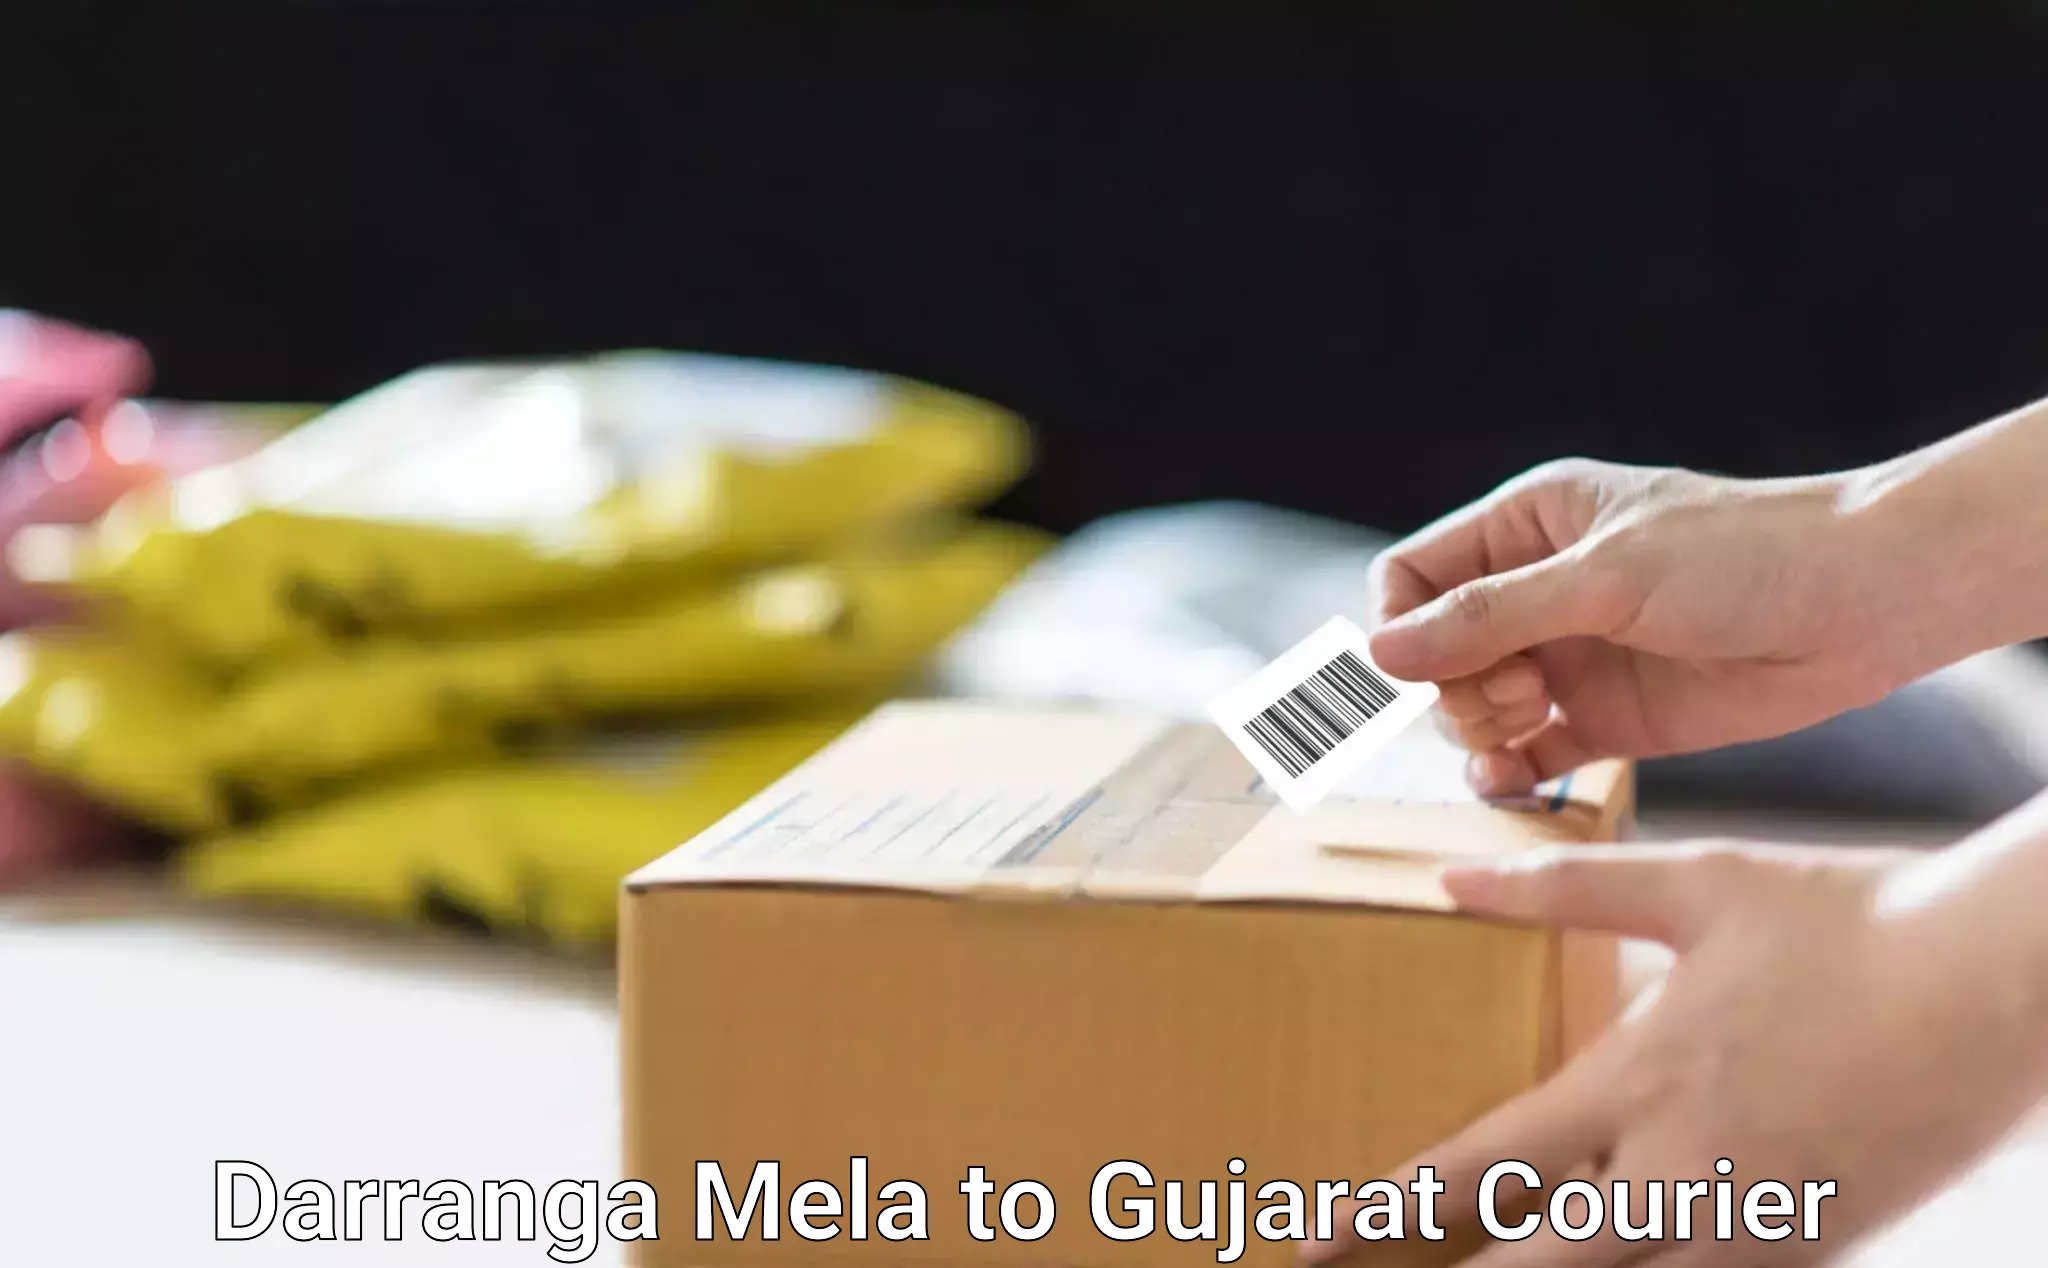 Professional courier handling Darranga Mela to Anand